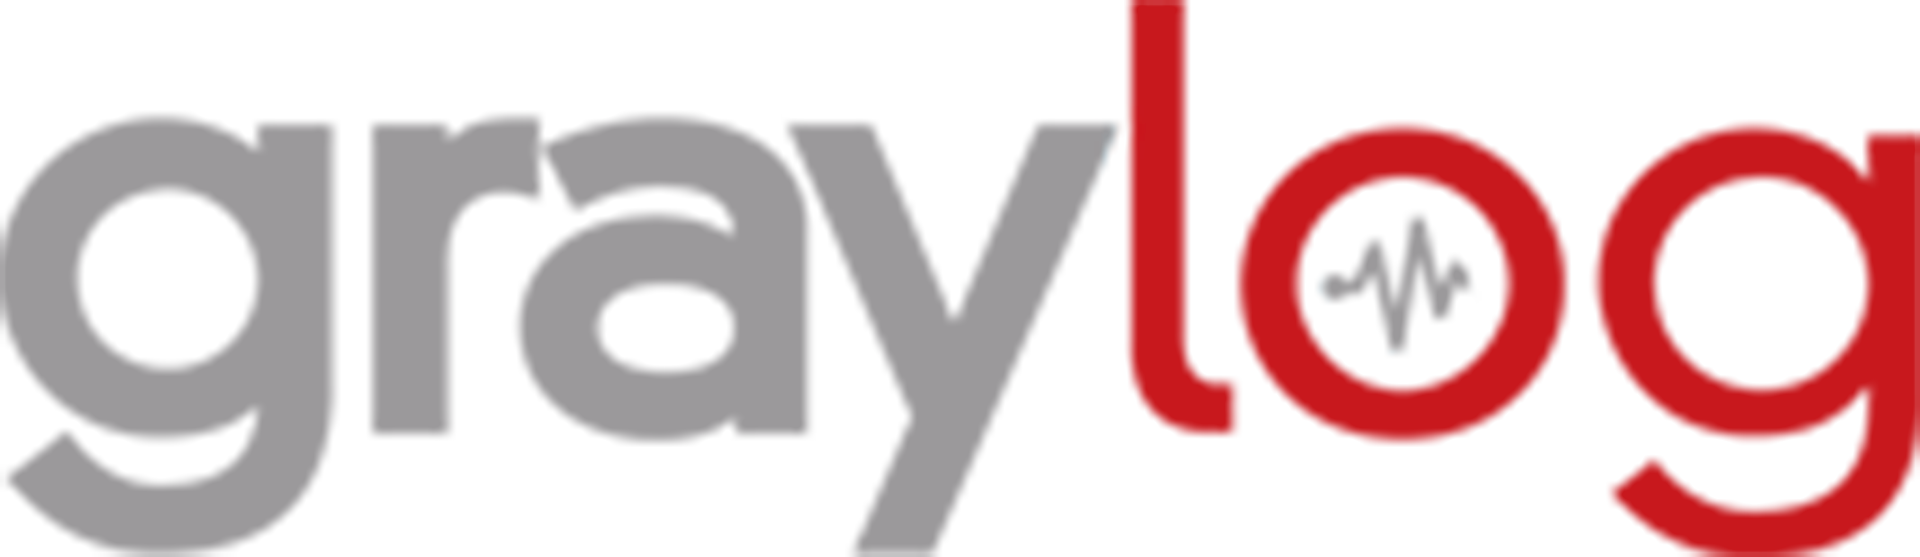 graylog-logo